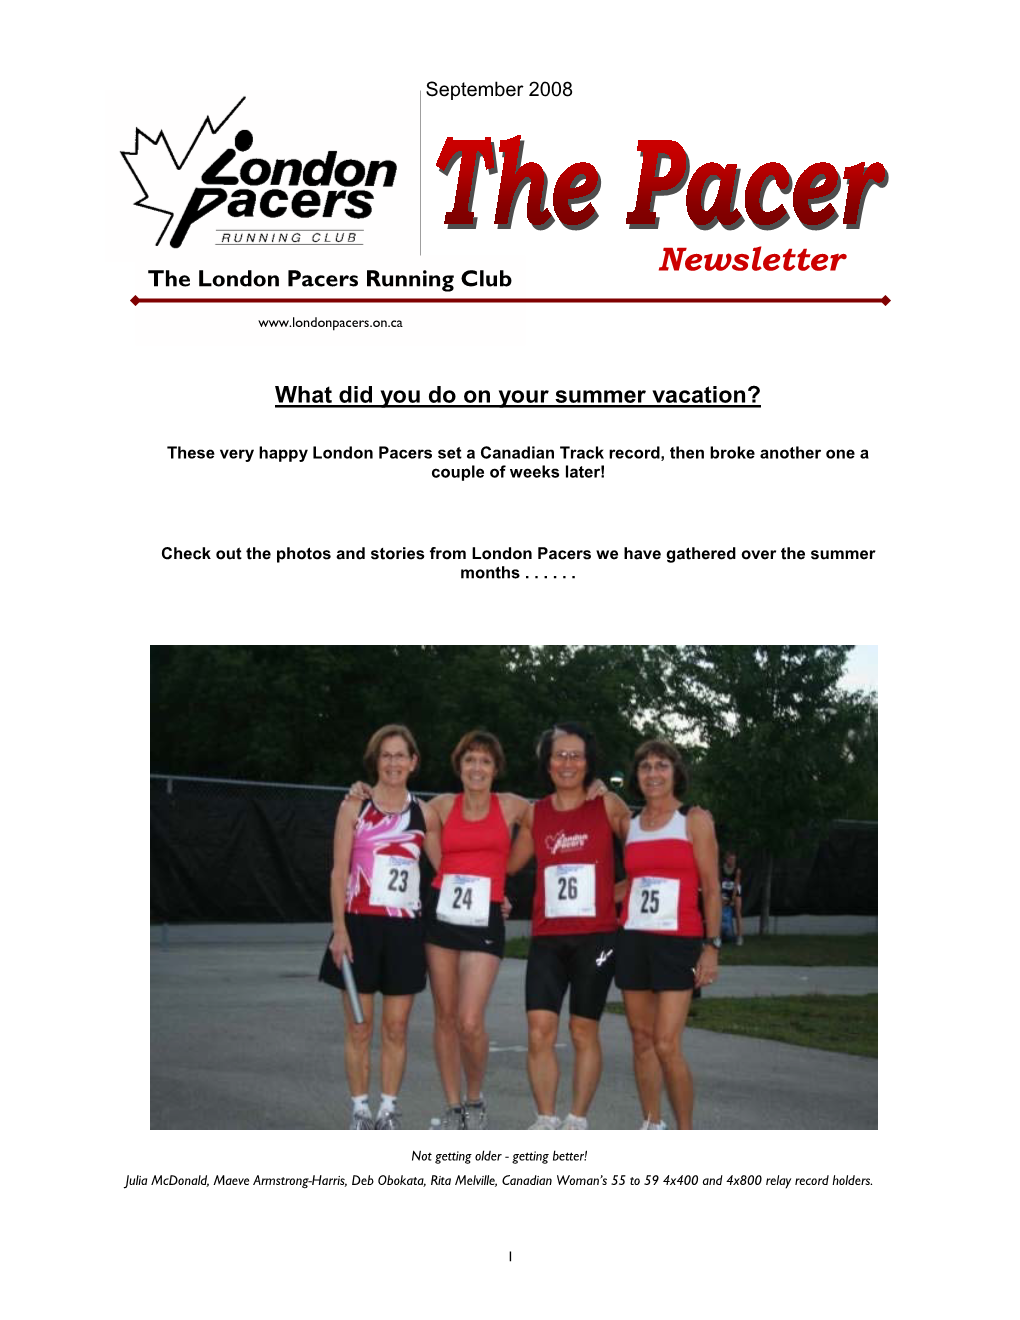 Pacers Newsletterseptember 2008